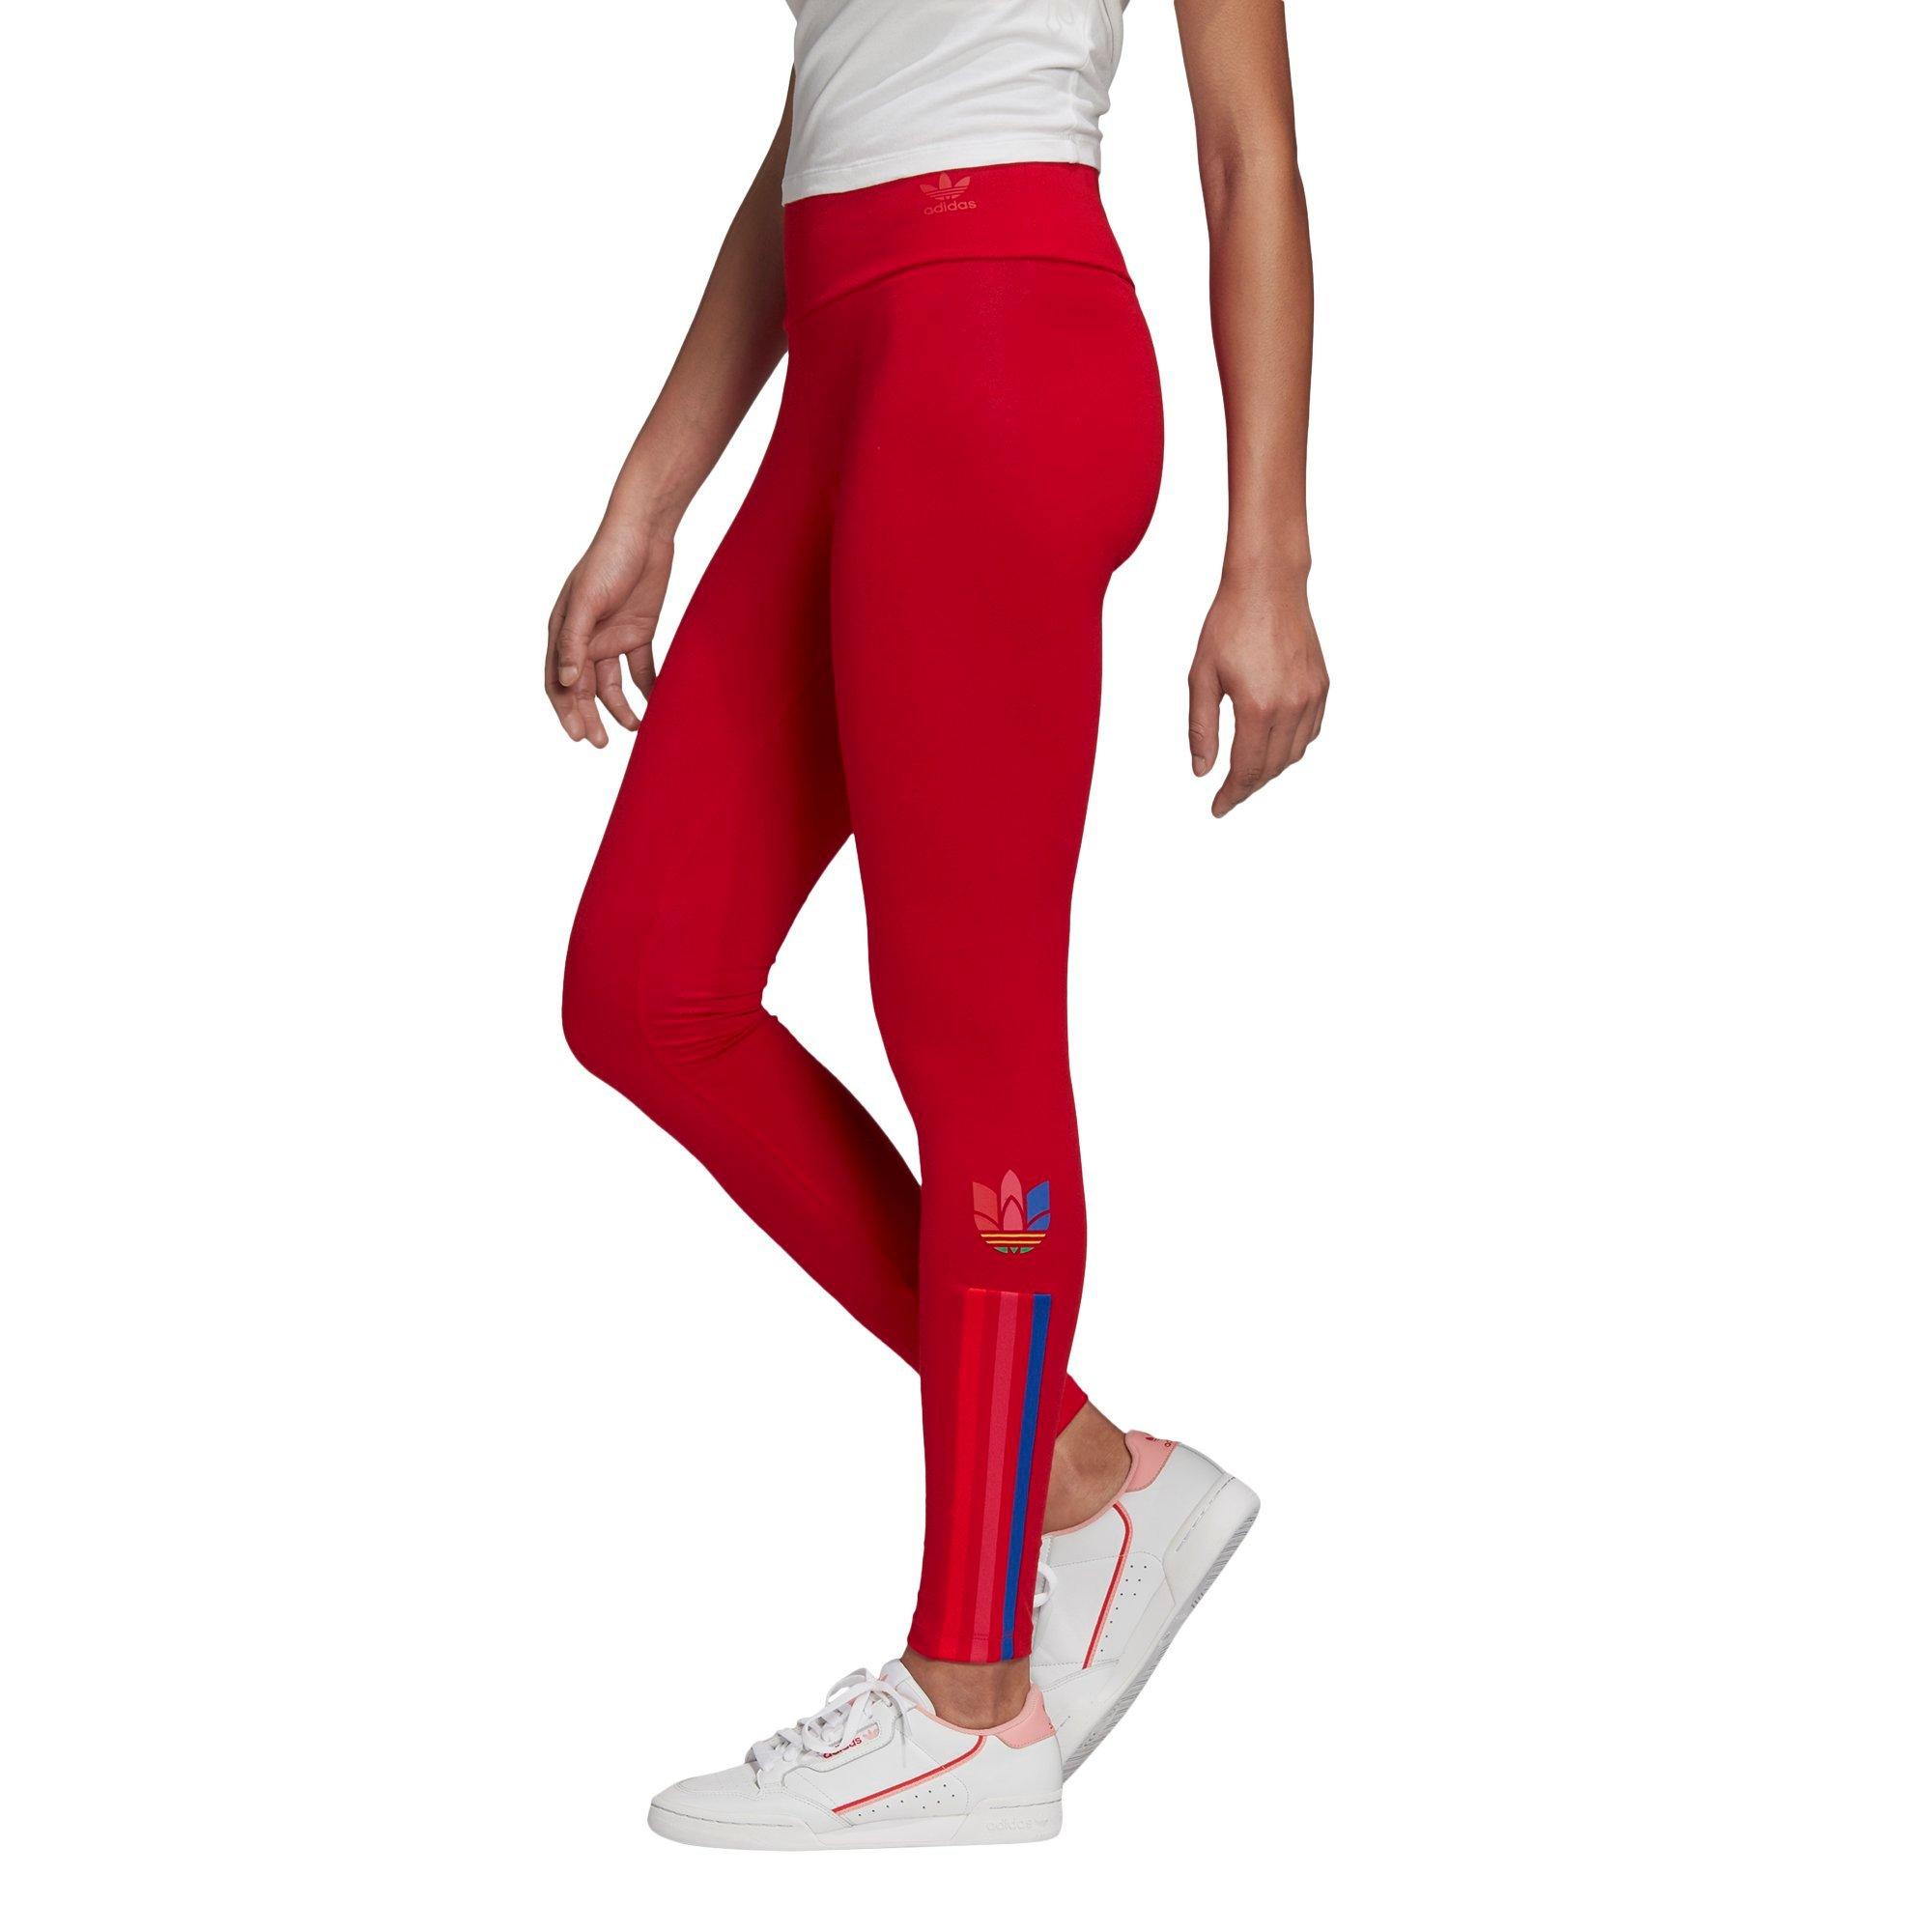 jd sports adidas trefoil leggings